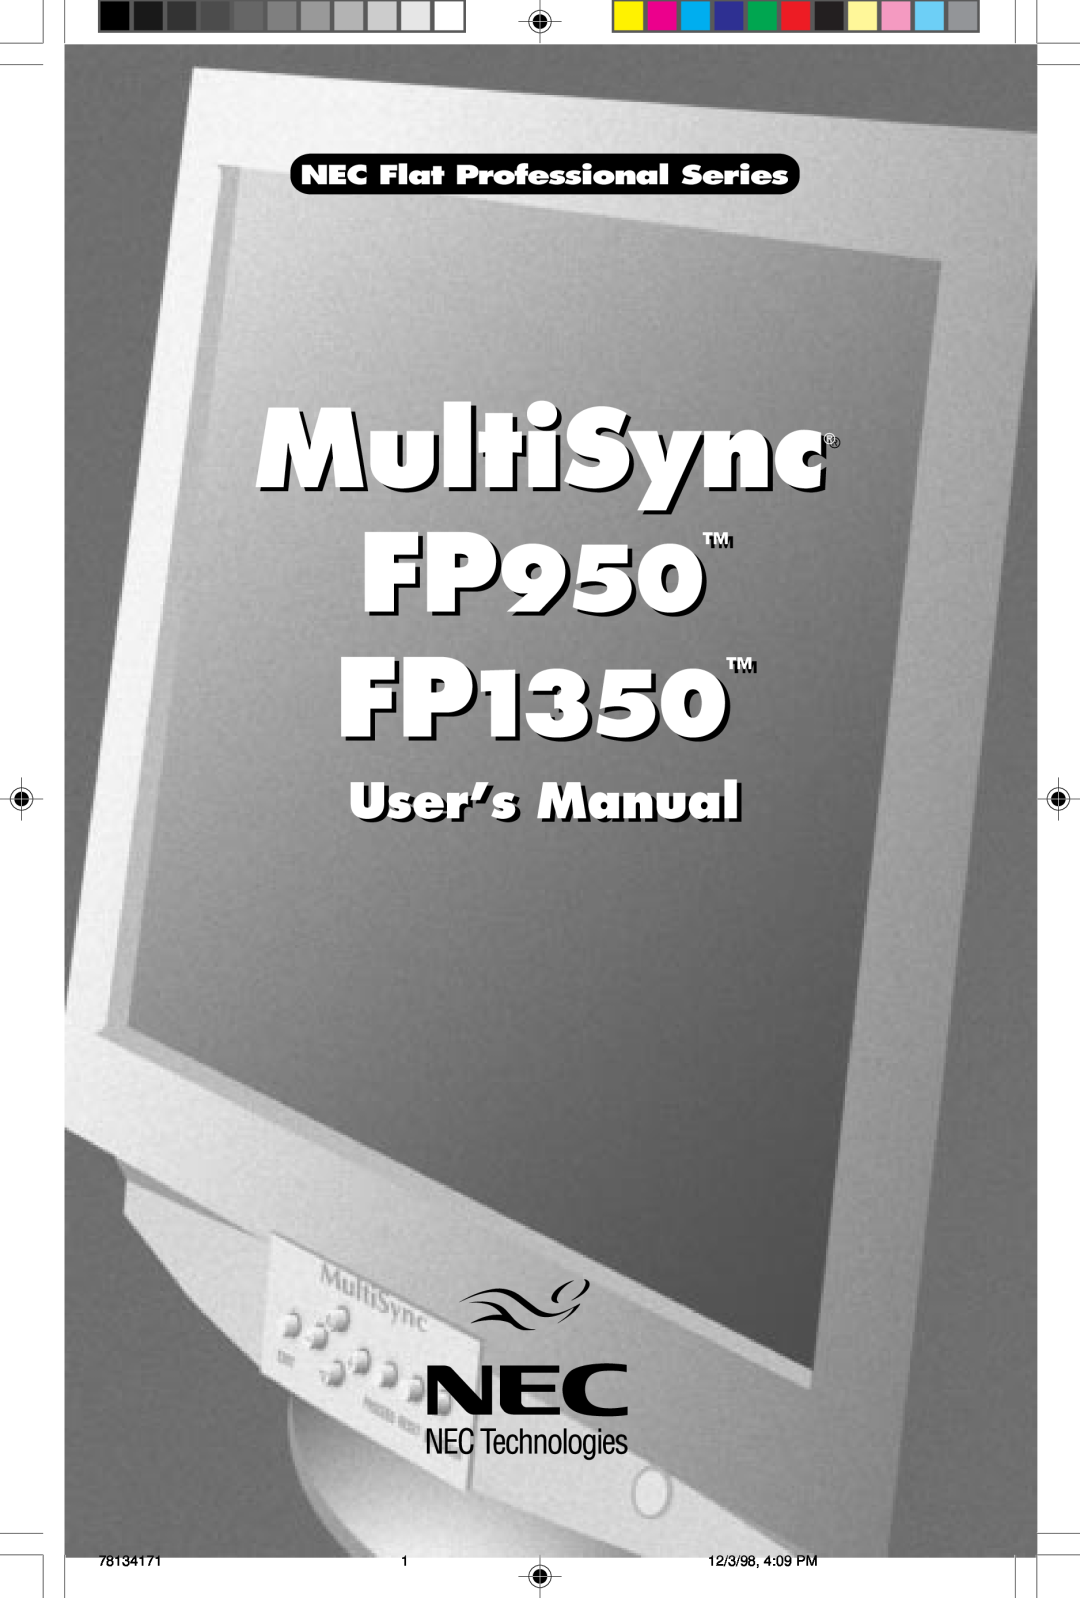 NEC JC-1946UMW, JC-2241UMW user manual User’s Manuall, MultiSync, FP950 FP1350, NEC Flat Professional Series, 78134171 